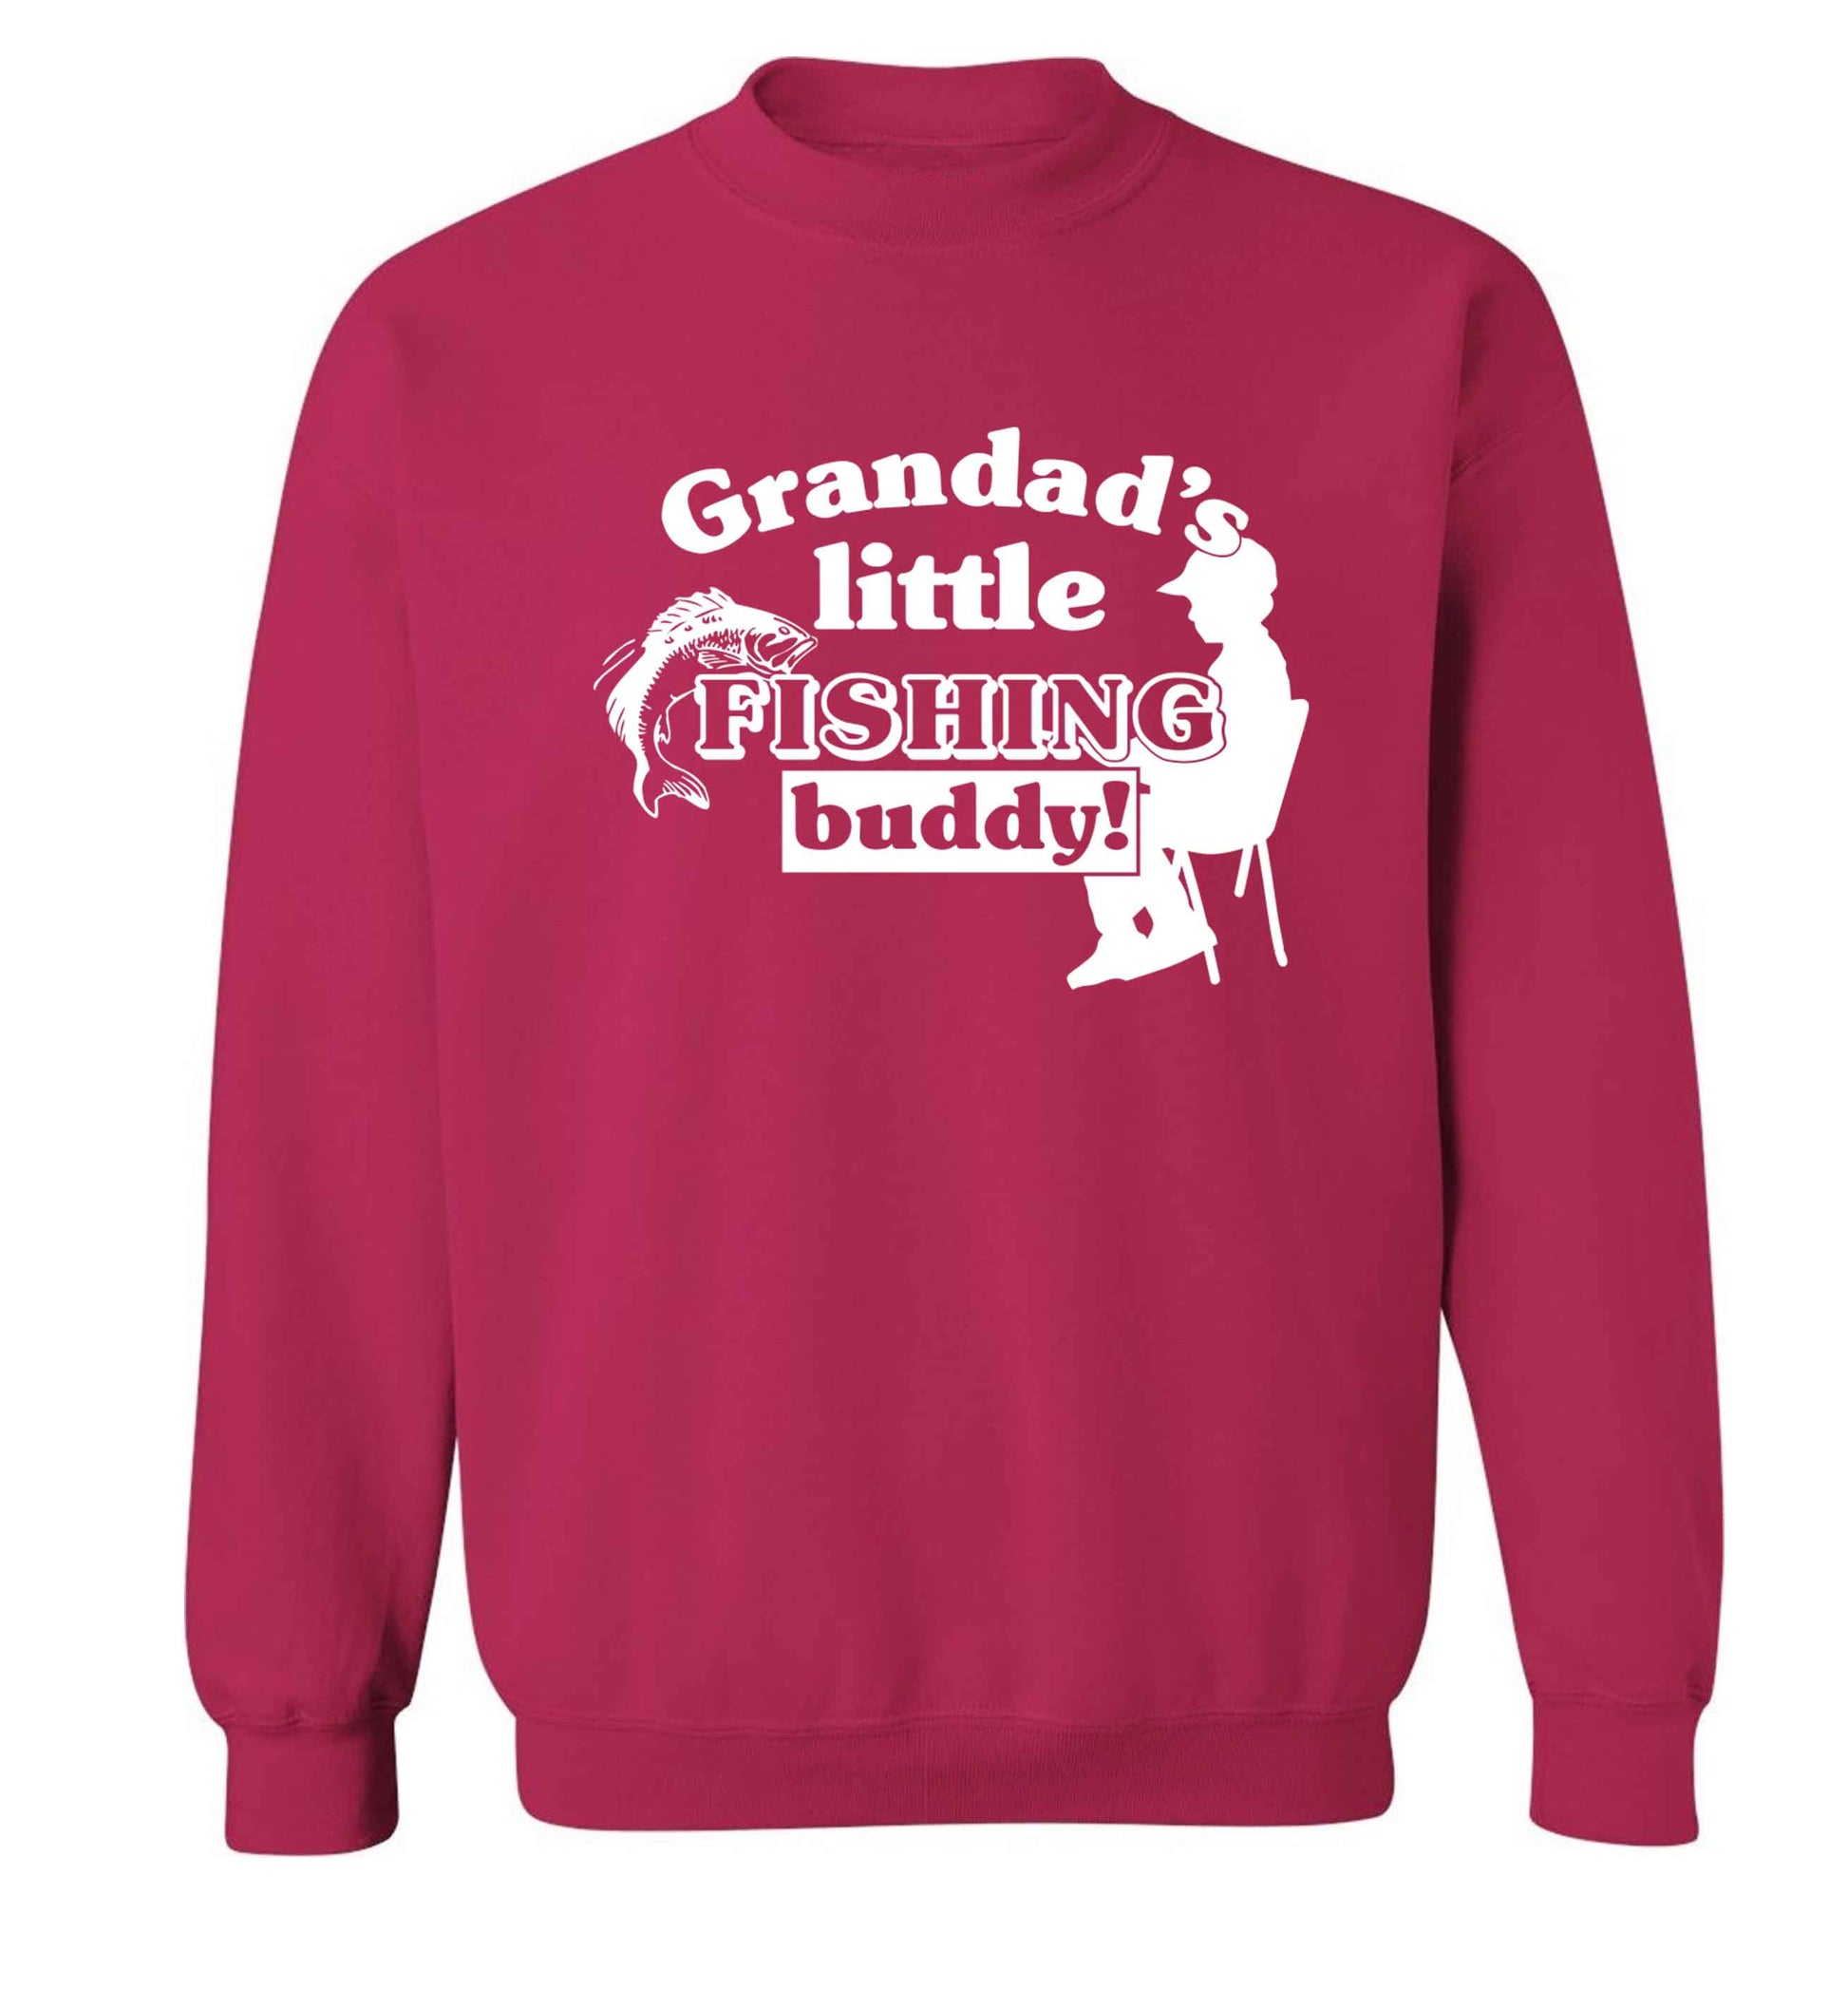 Grandad's little fishing buddy! Adult's unisex pink Sweater 2XL